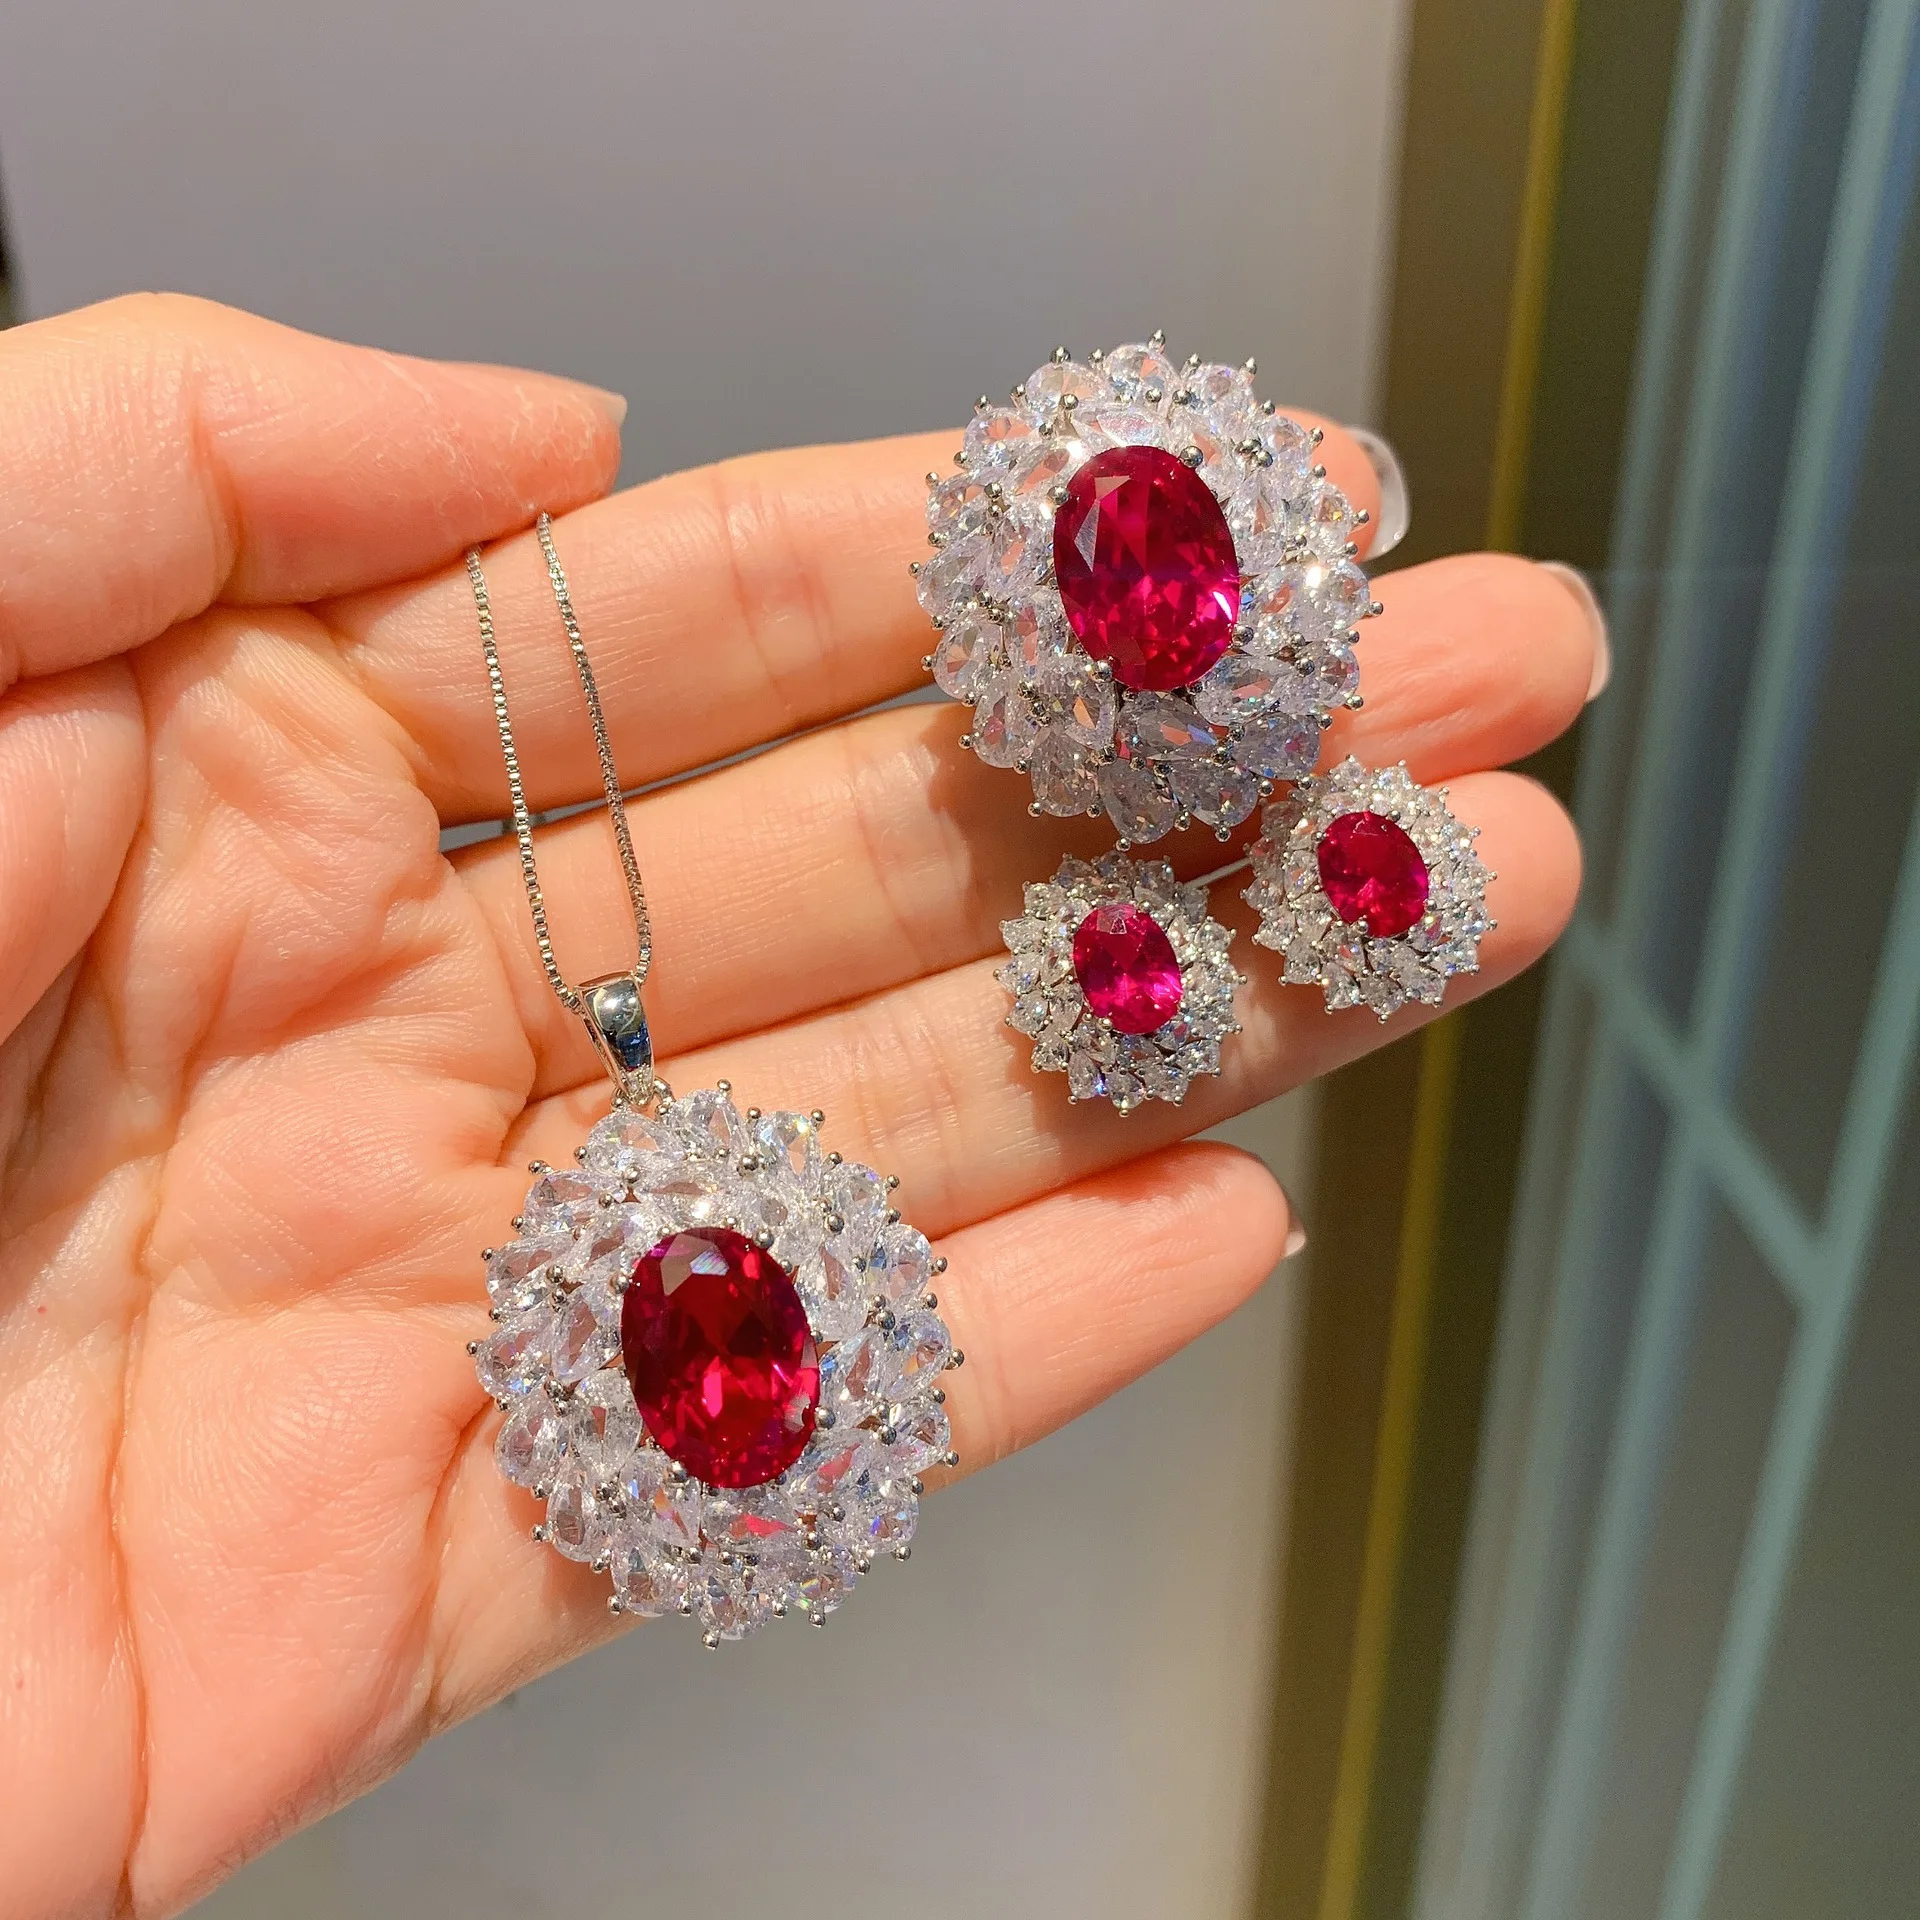 

JMK Luxury Ruby Gemstone Jewelry Sets Zircon Pendant Necklacen Earrings Bridal Wedding Ring Sets Lab Diamond Jewelry Gift Women